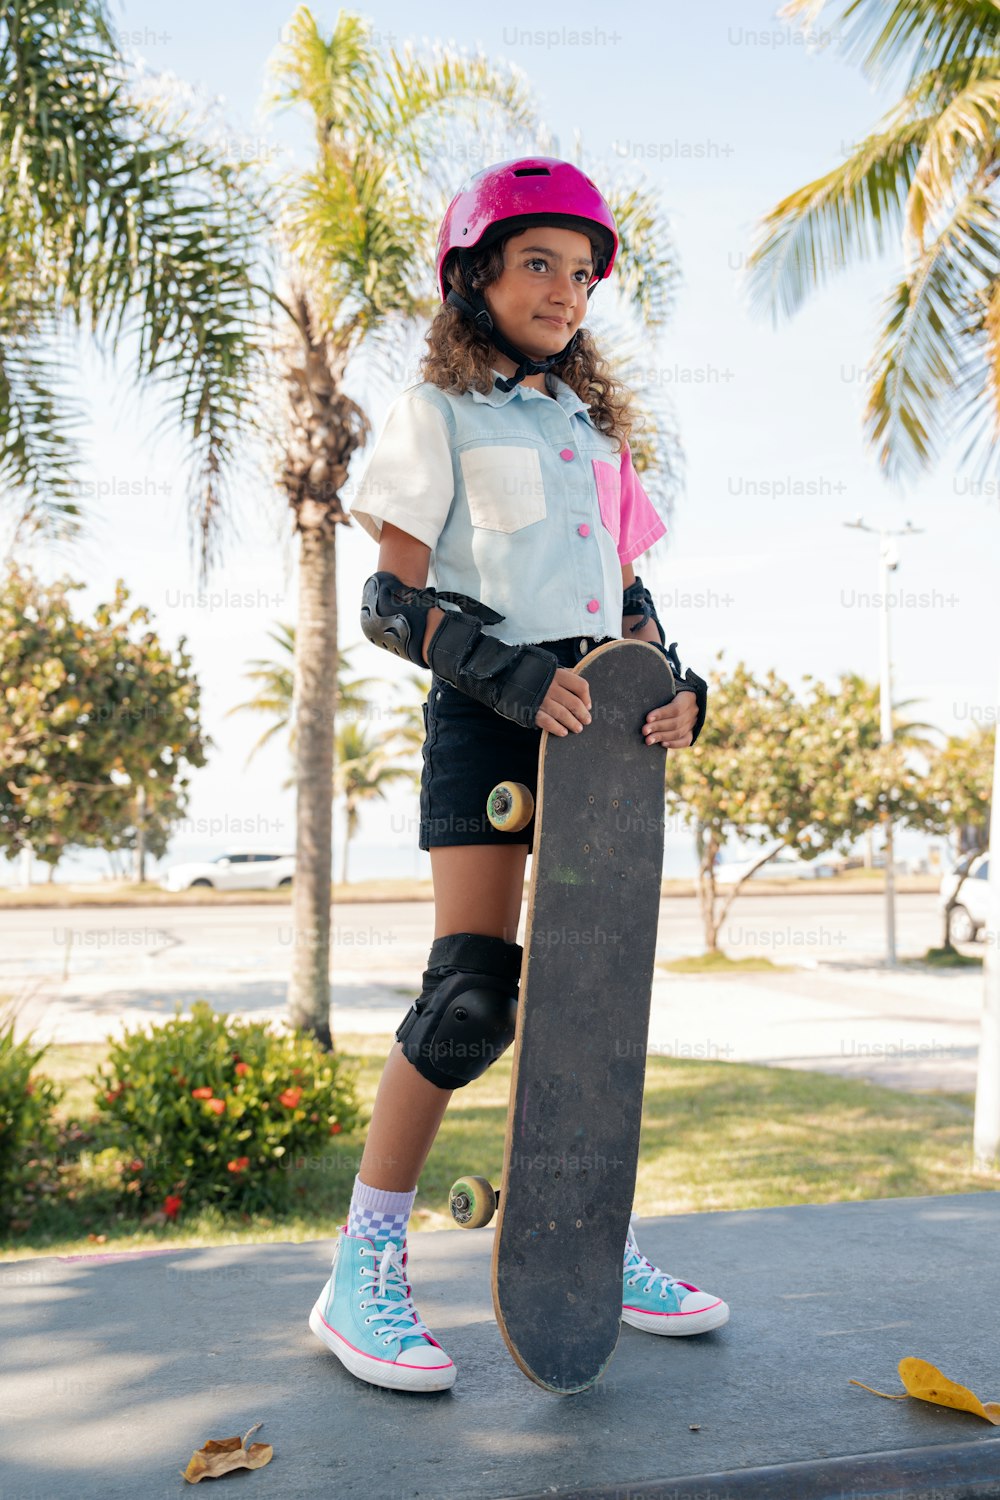 una giovane ragazza che tiene uno skateboard su un marciapiede